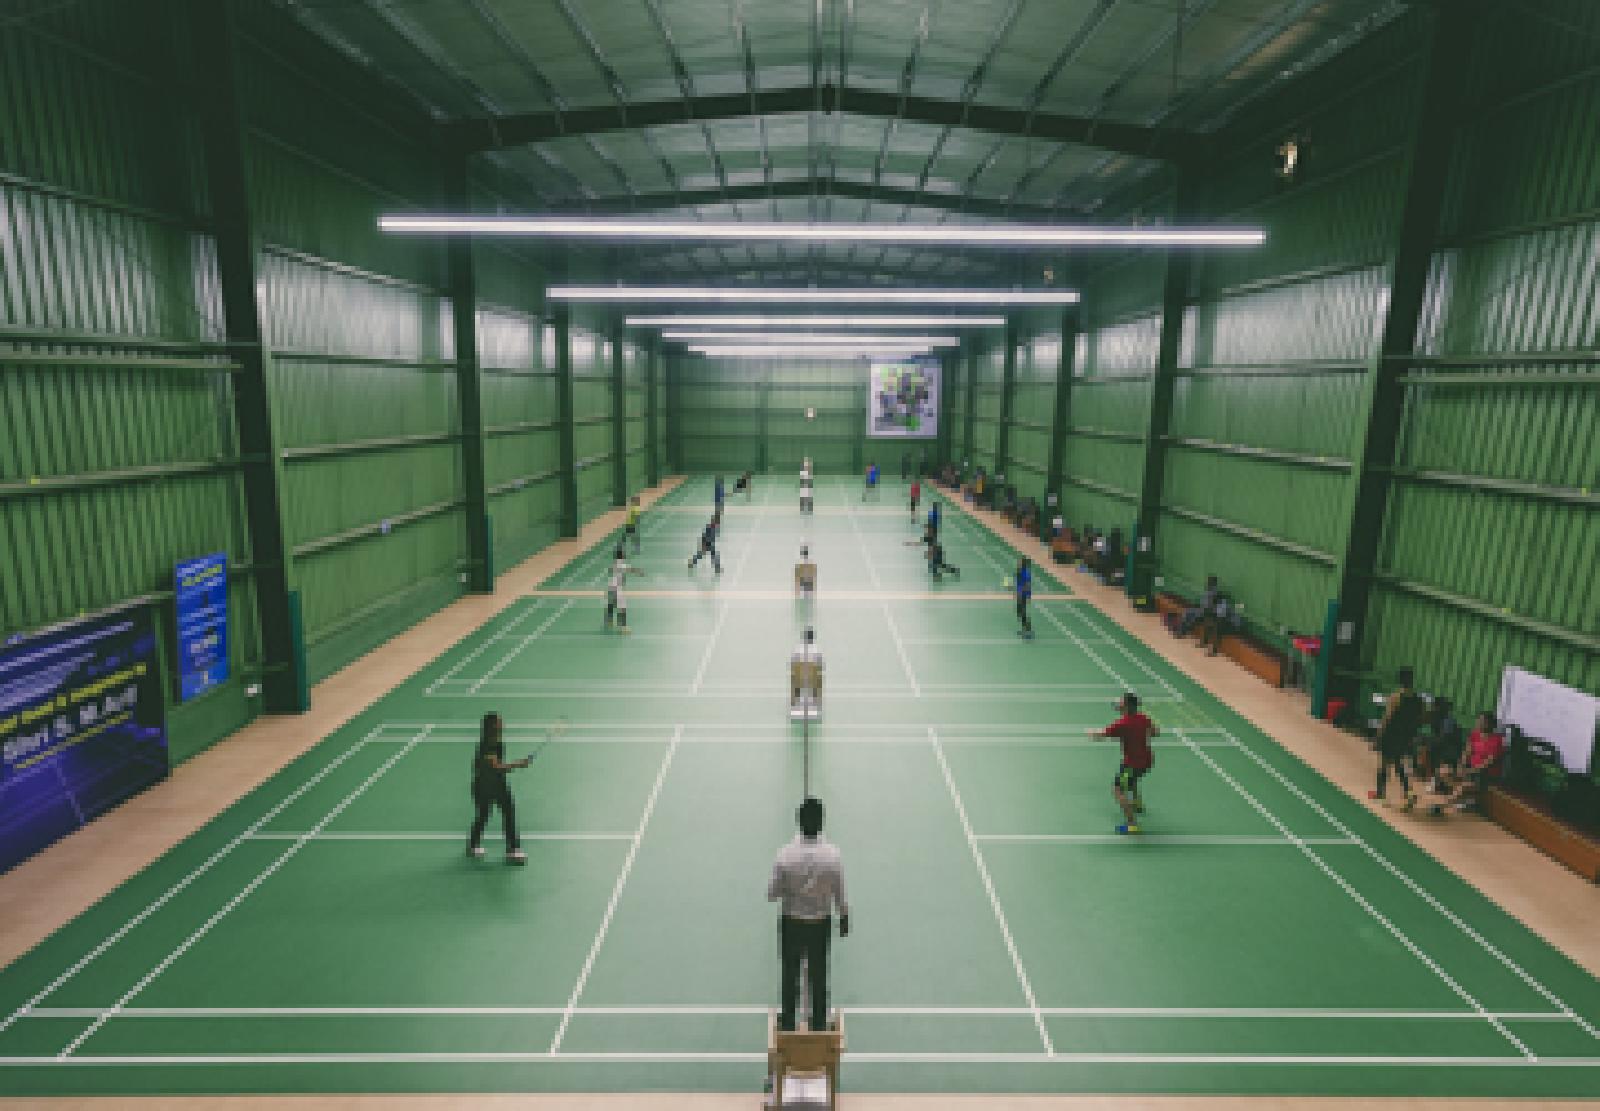 Elite sports club for Badminton - GW Sports App